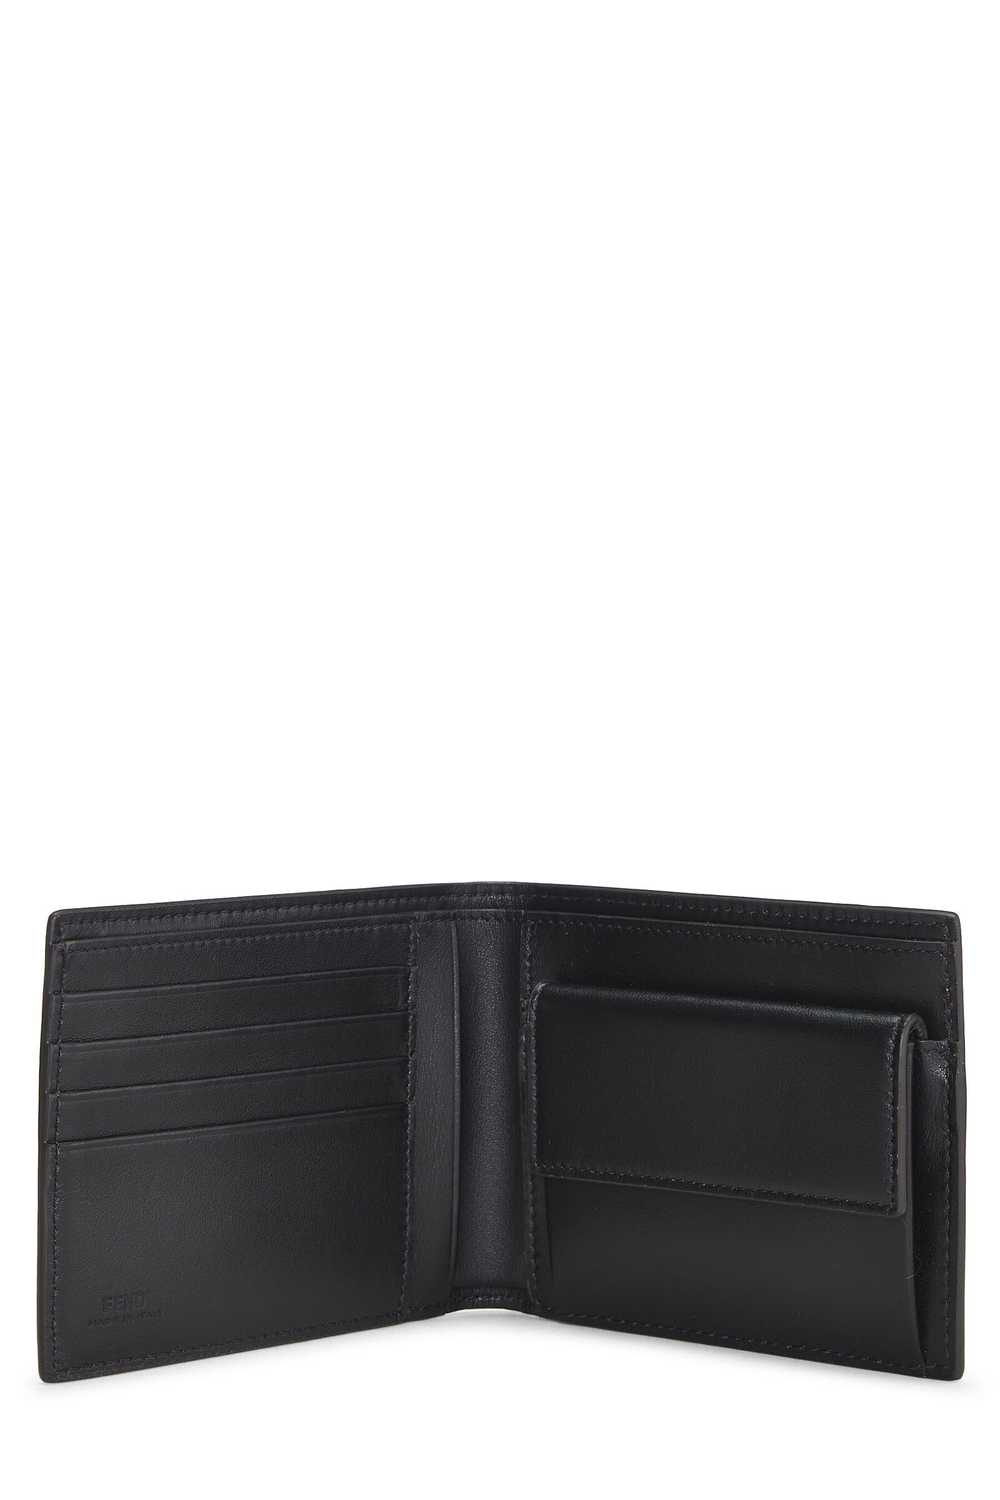 Blue Zucchino Leather Bifold Wallet - image 4